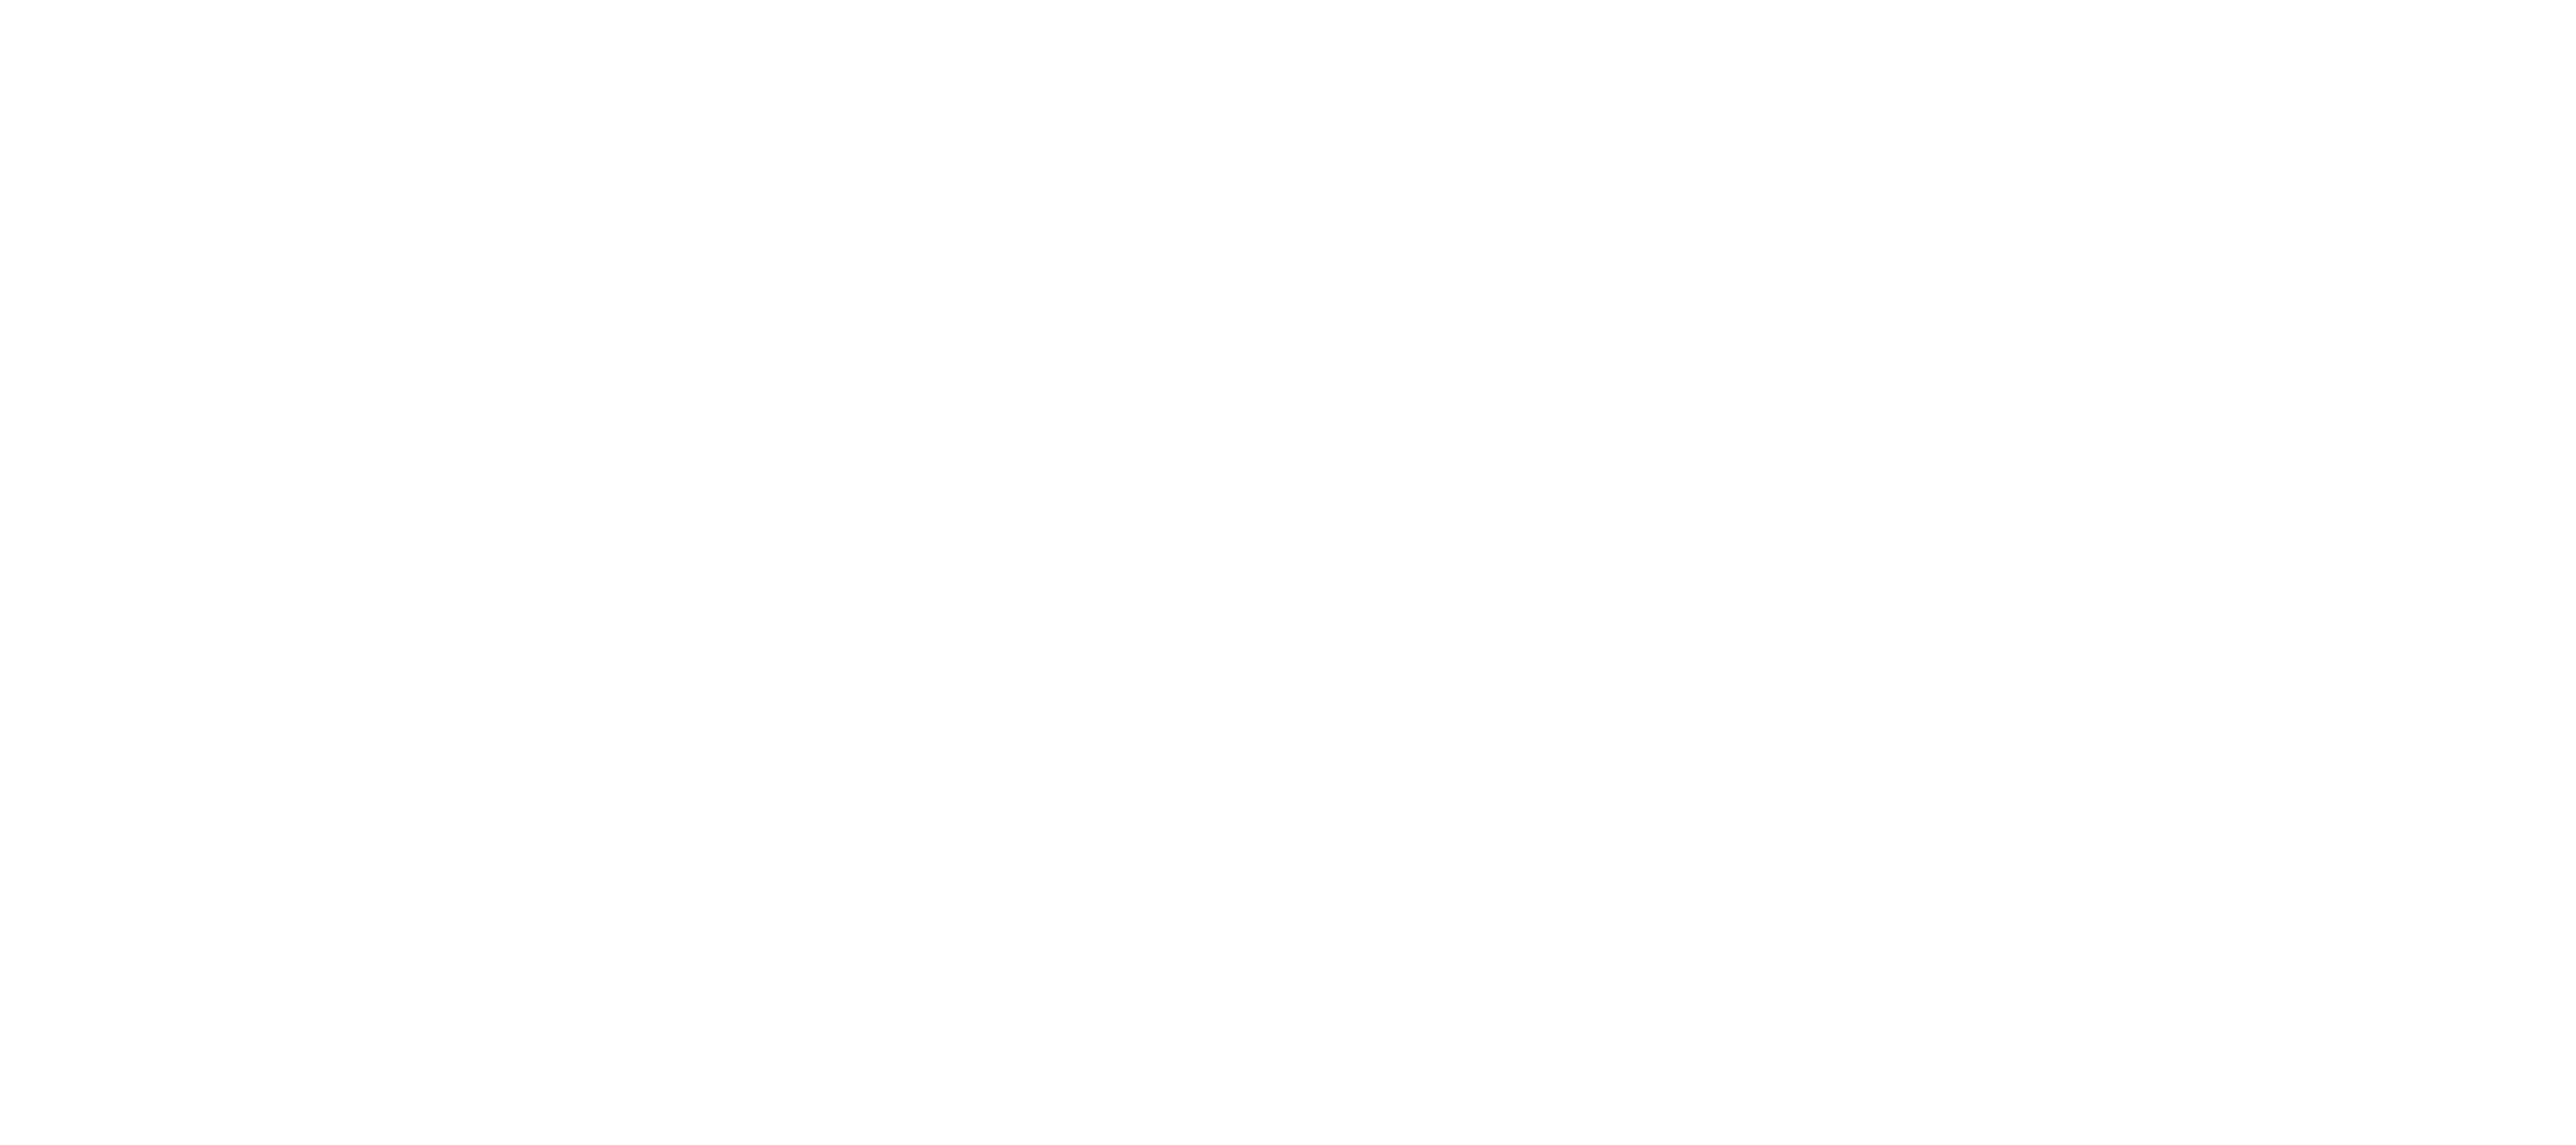 ceu logo initials with clearance horizontal 1 color white v6